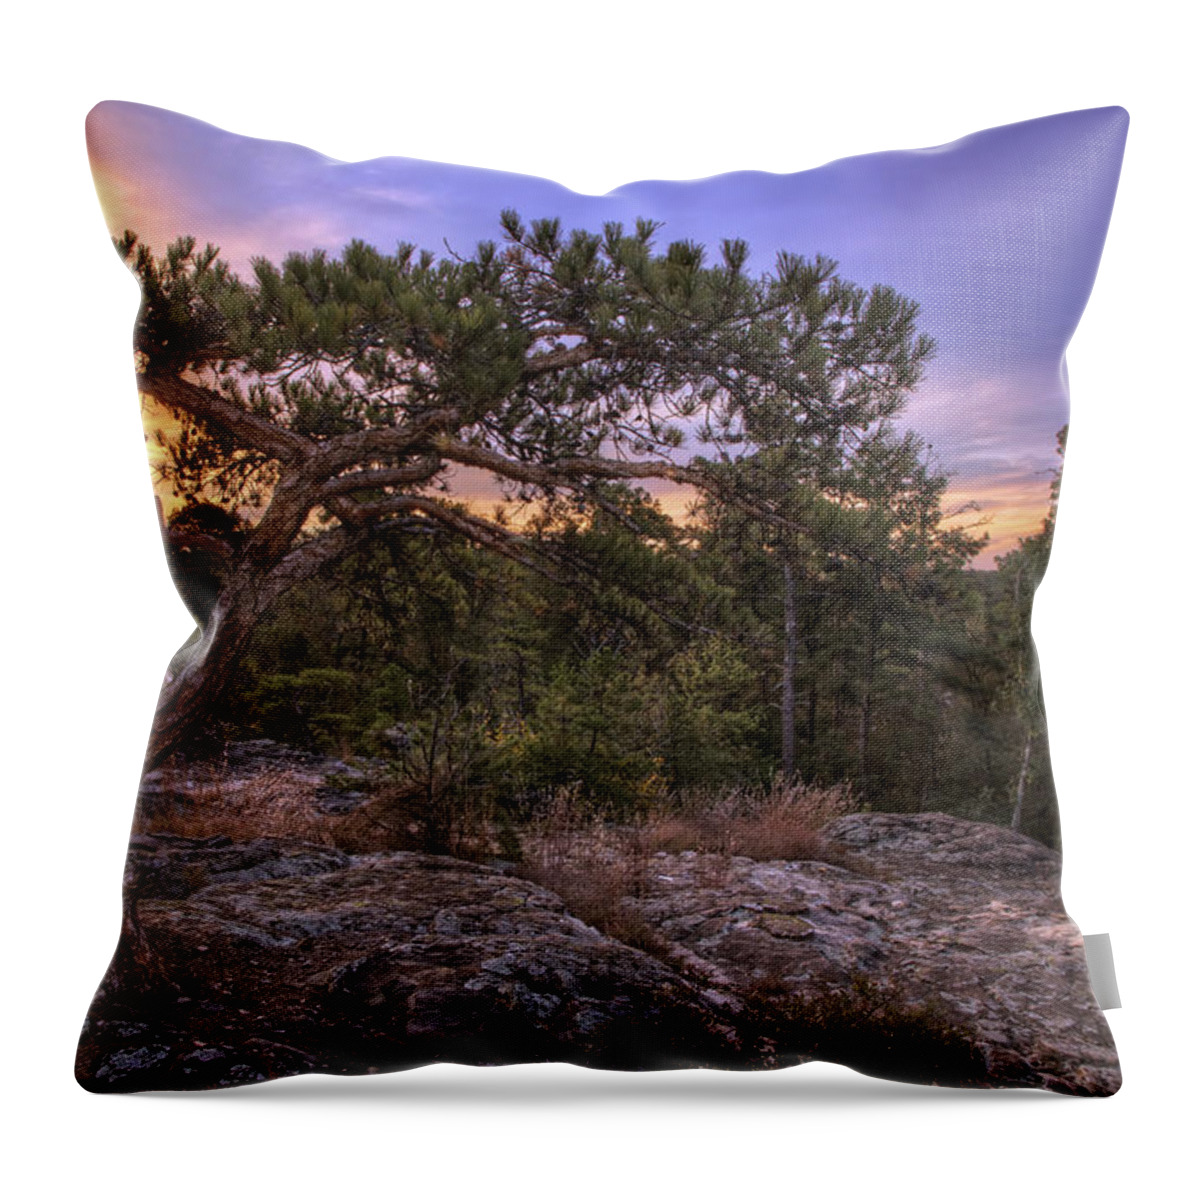 Petit Jean Throw Pillow featuring the photograph Petit Jean Mountain Bonsai Tree - Arkansas by Jason Politte